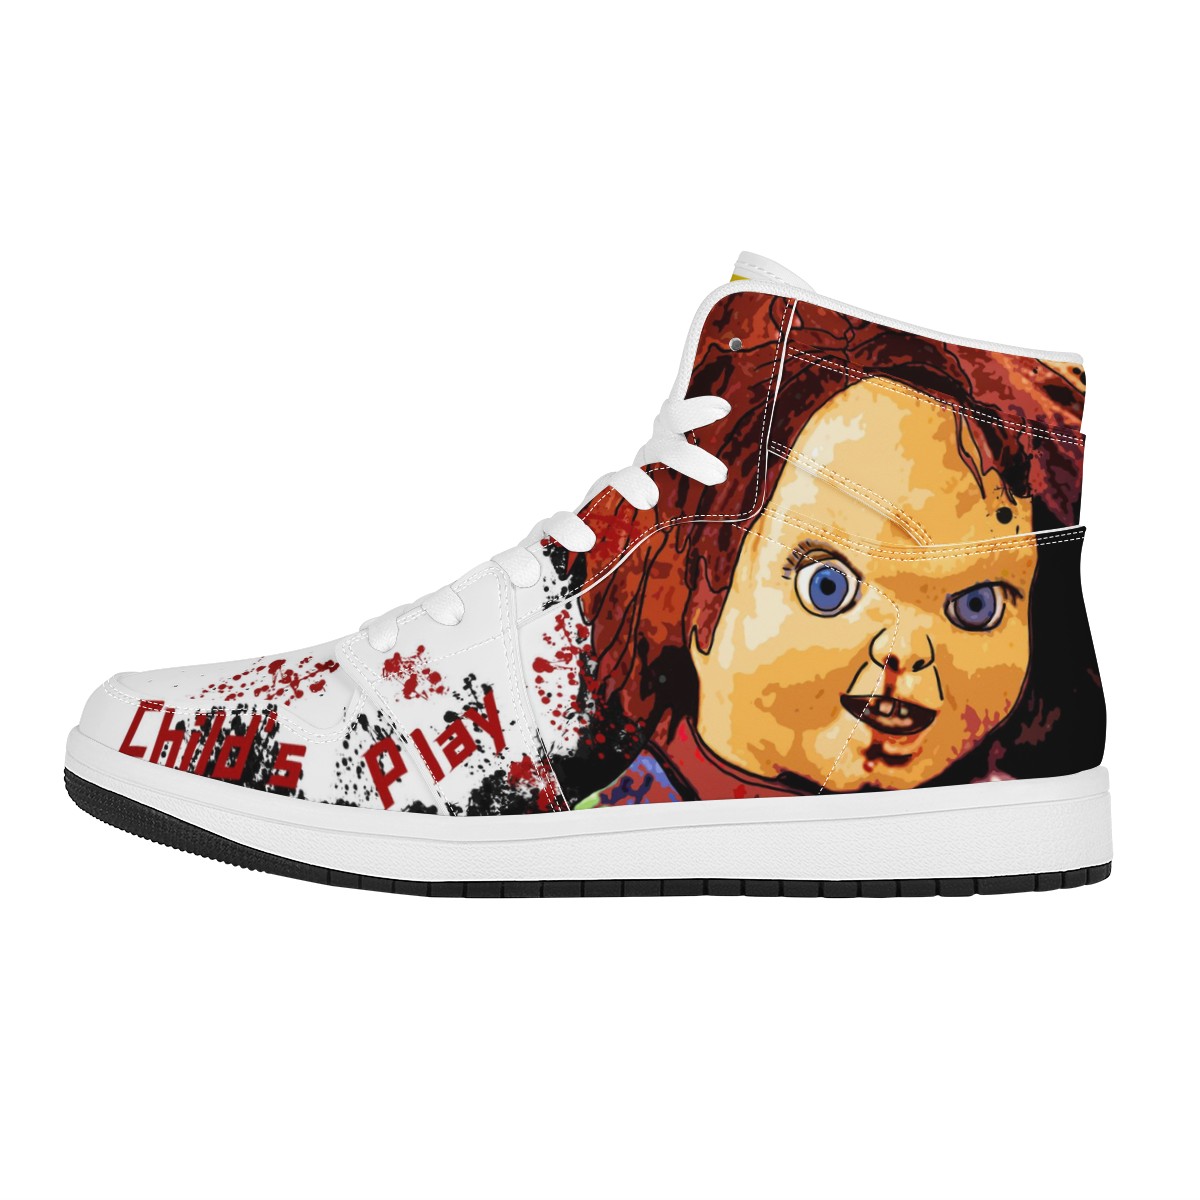 Chucky Custom Nike Air Jordan 1 Leather Sneaker